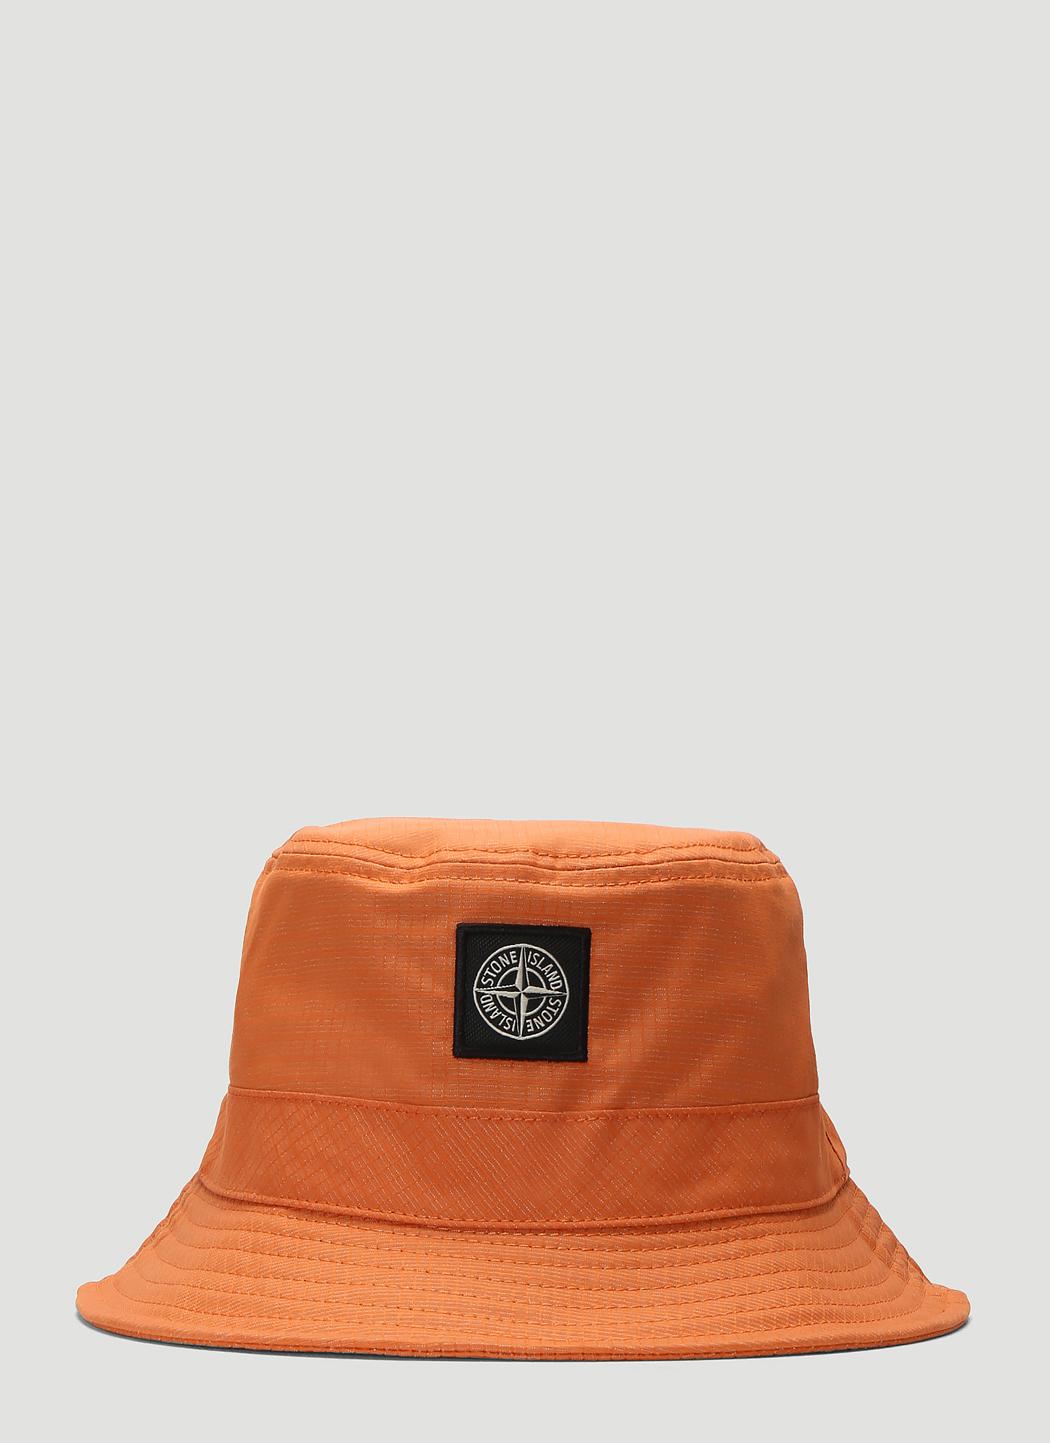 Stone Island Cotton Logo Bucket Hat in Orange for Men | Lyst